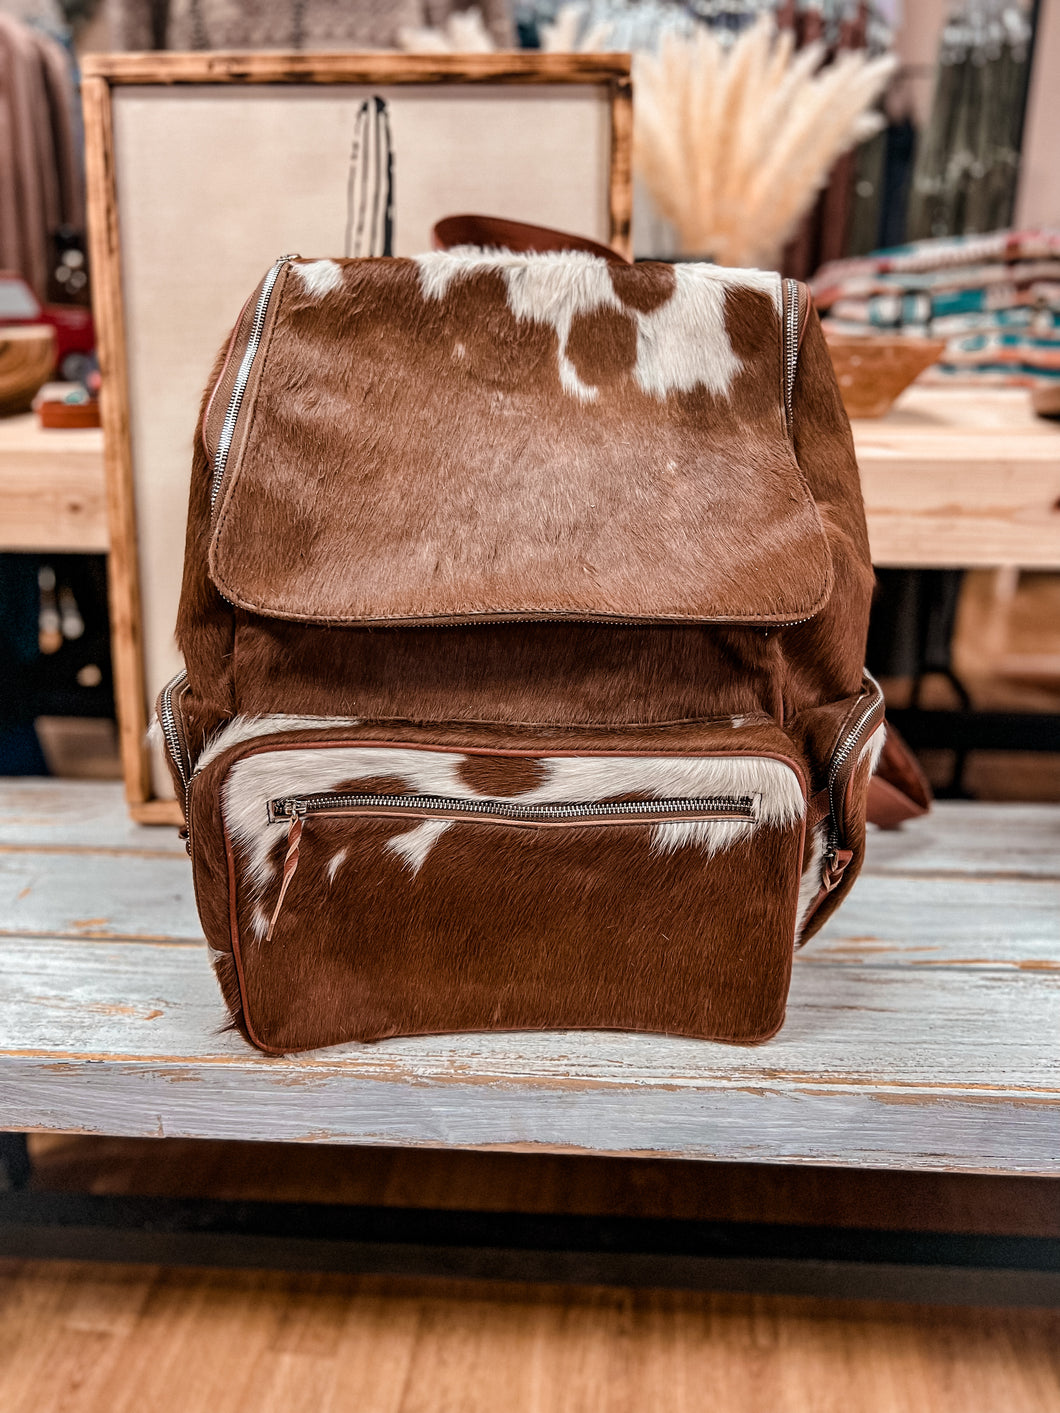 The Blue Ridge Cowhide Backpack (Brown & White Cowhide)